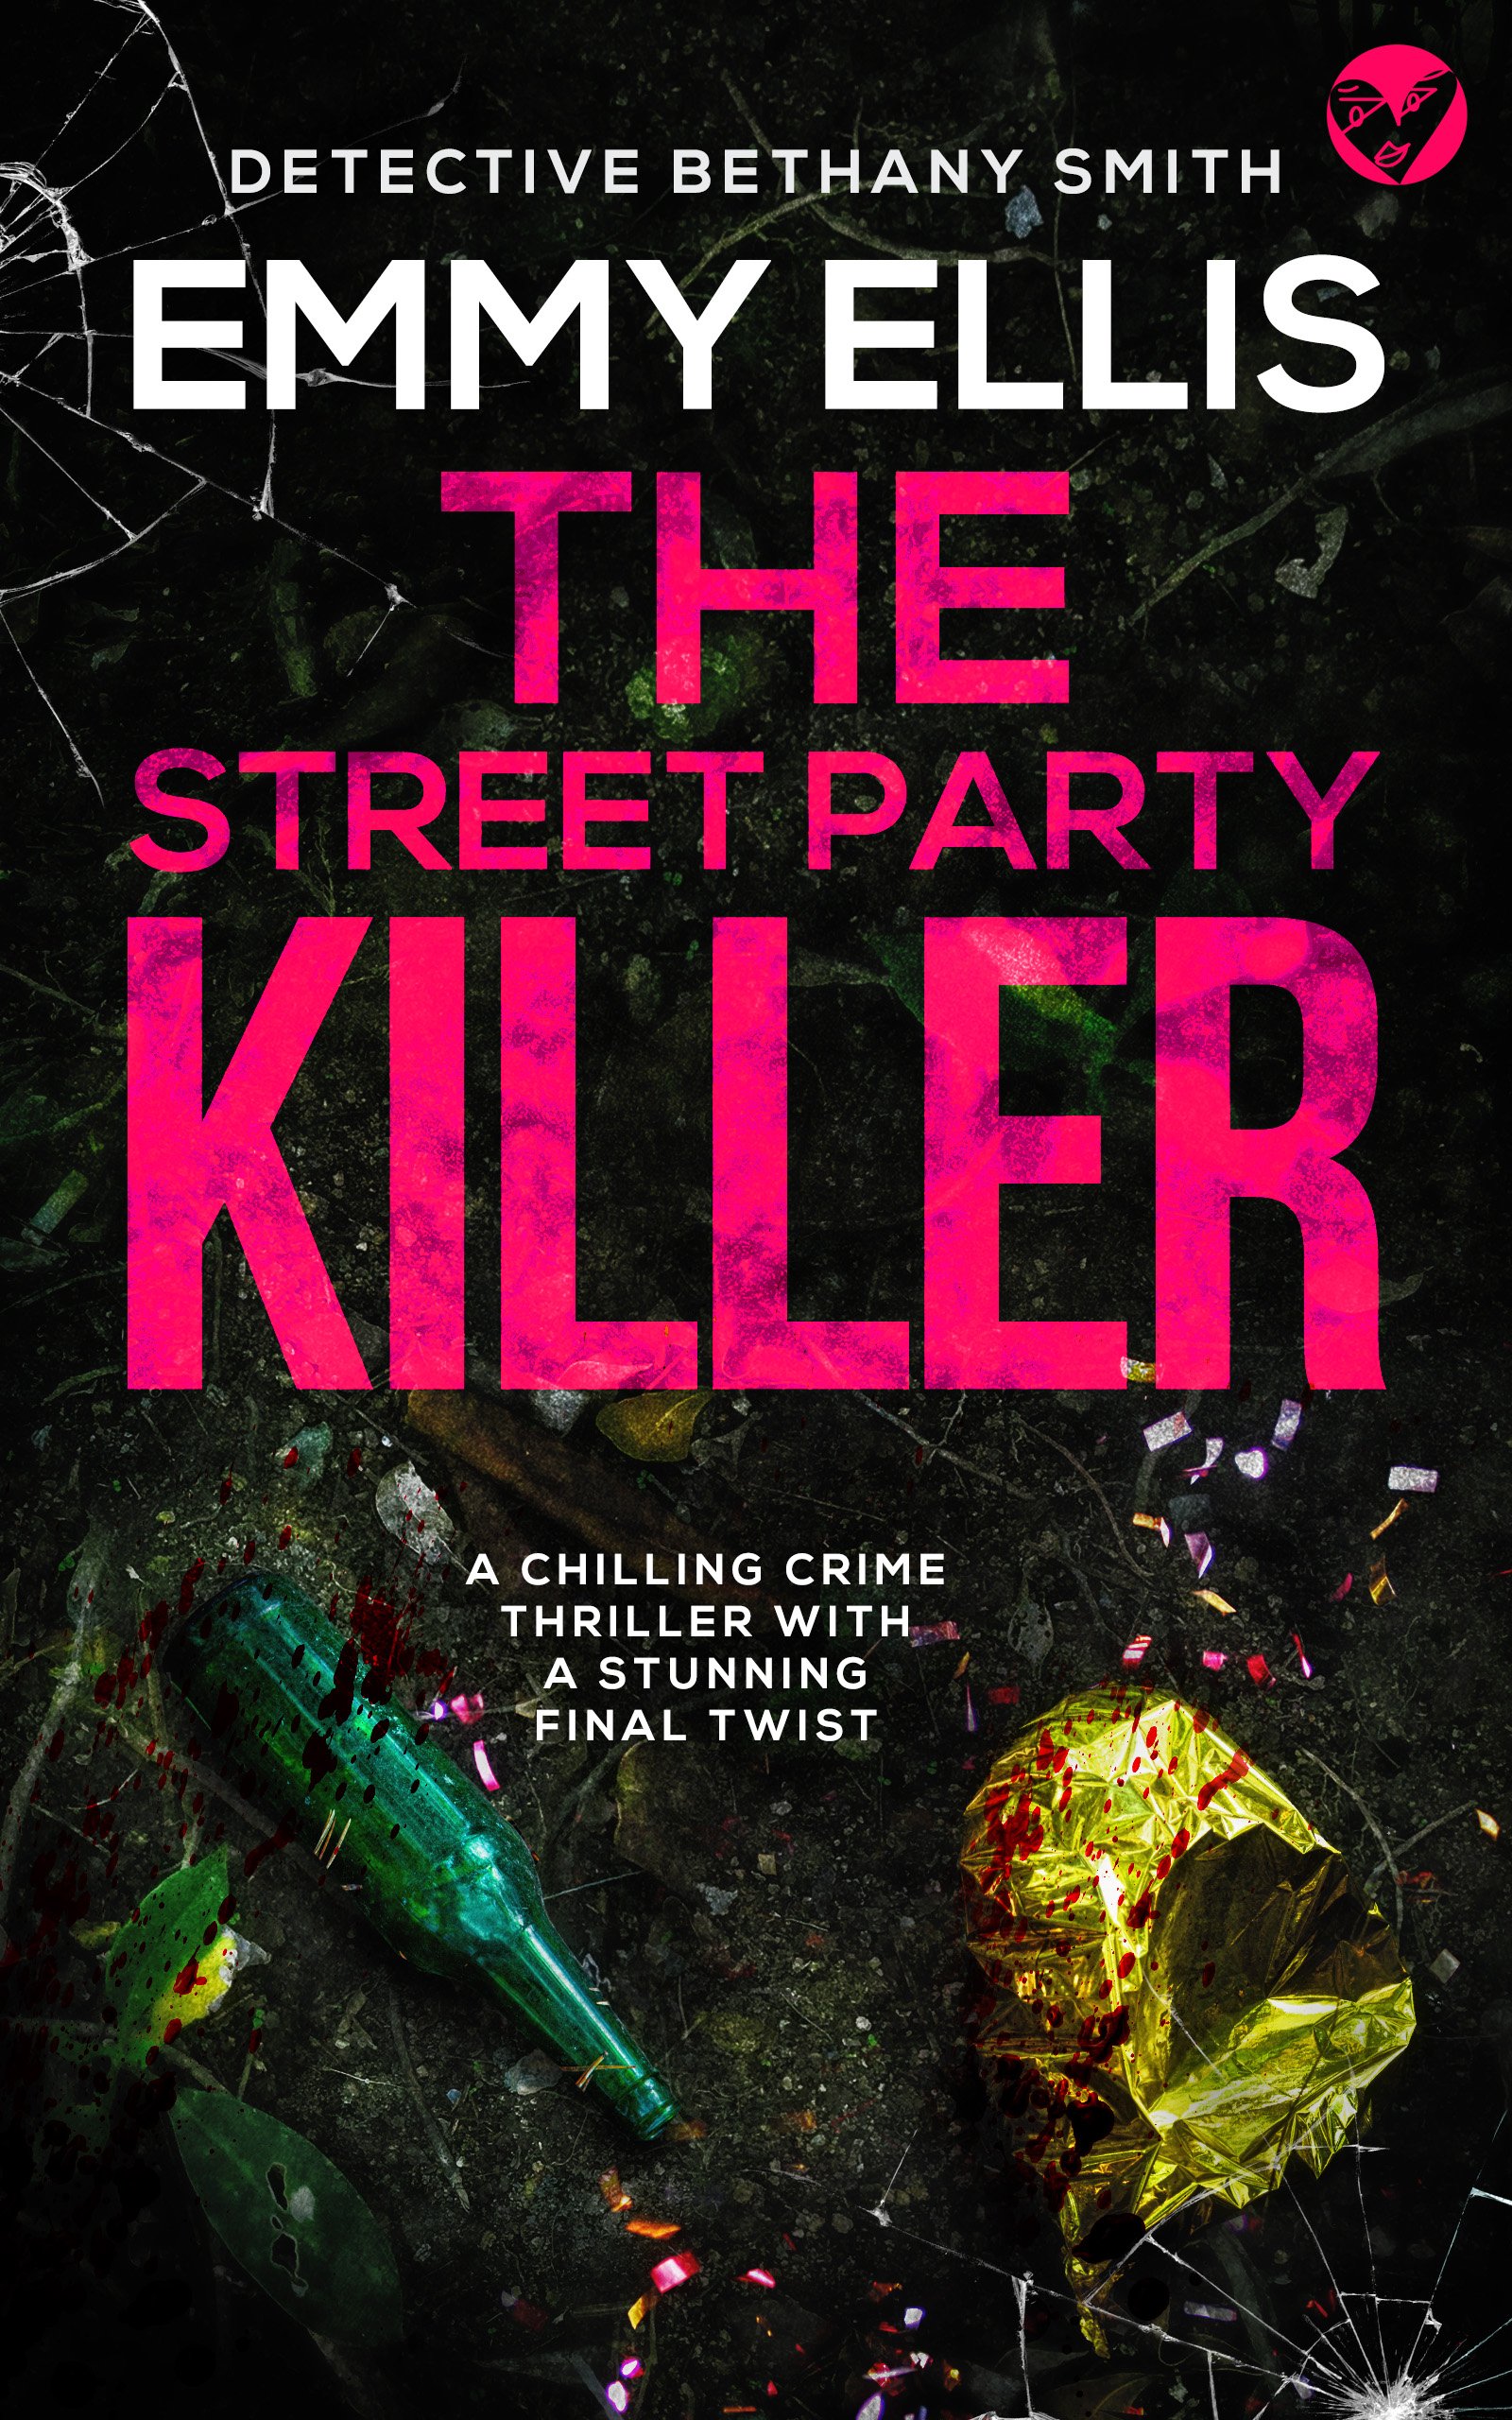 THE STREET PARTY KILLER Cover publish.jpg